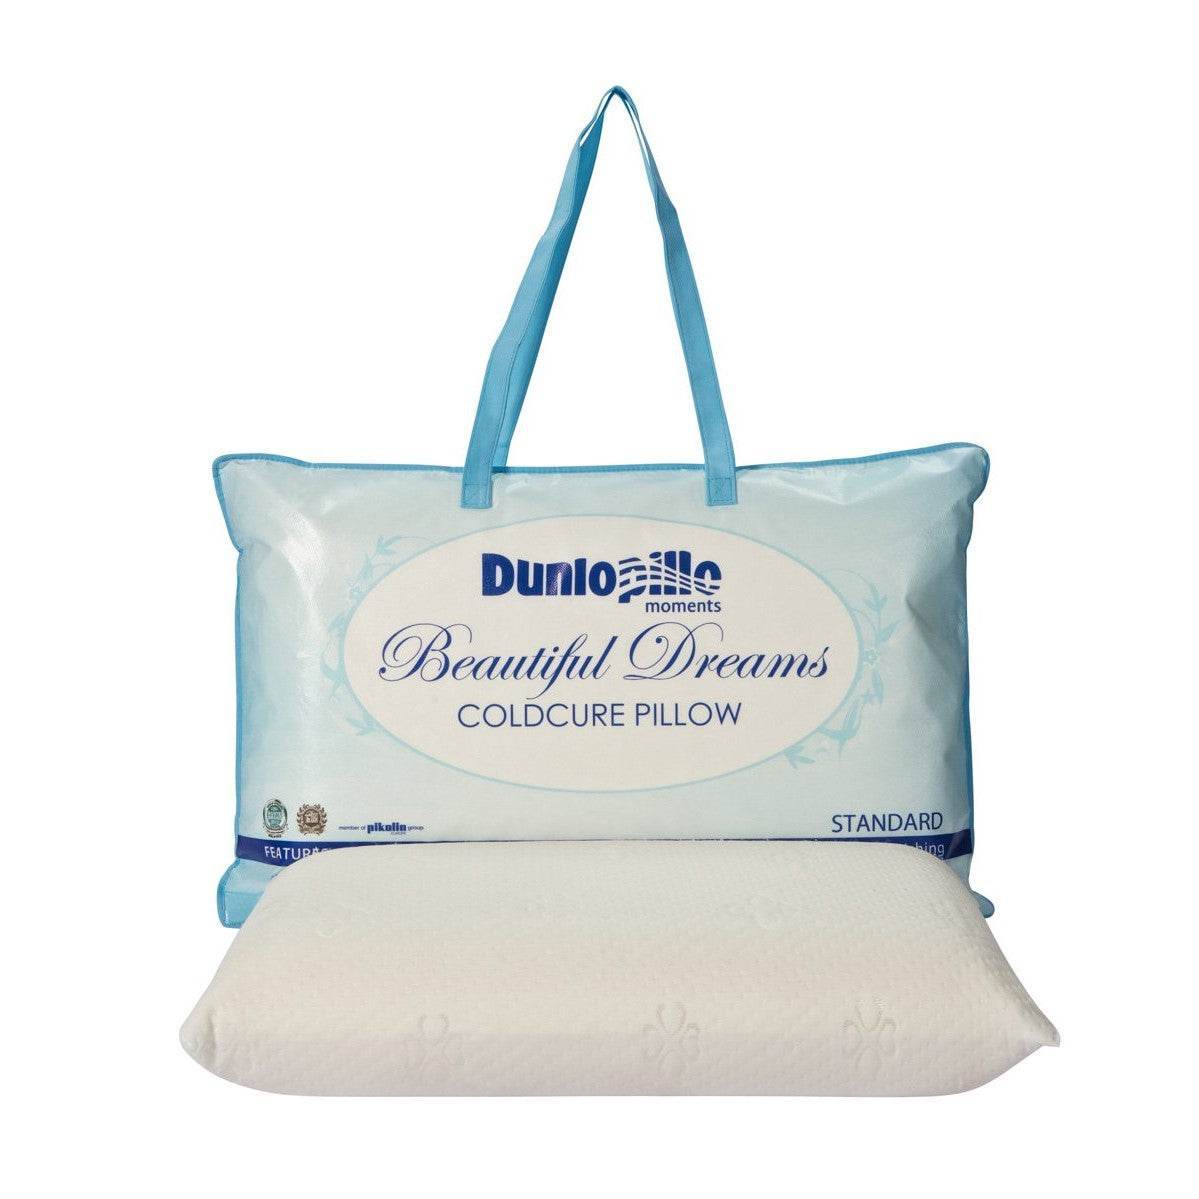 Dunlopillo Beautiful Dreams Standard Coldcure Pillow Singapore